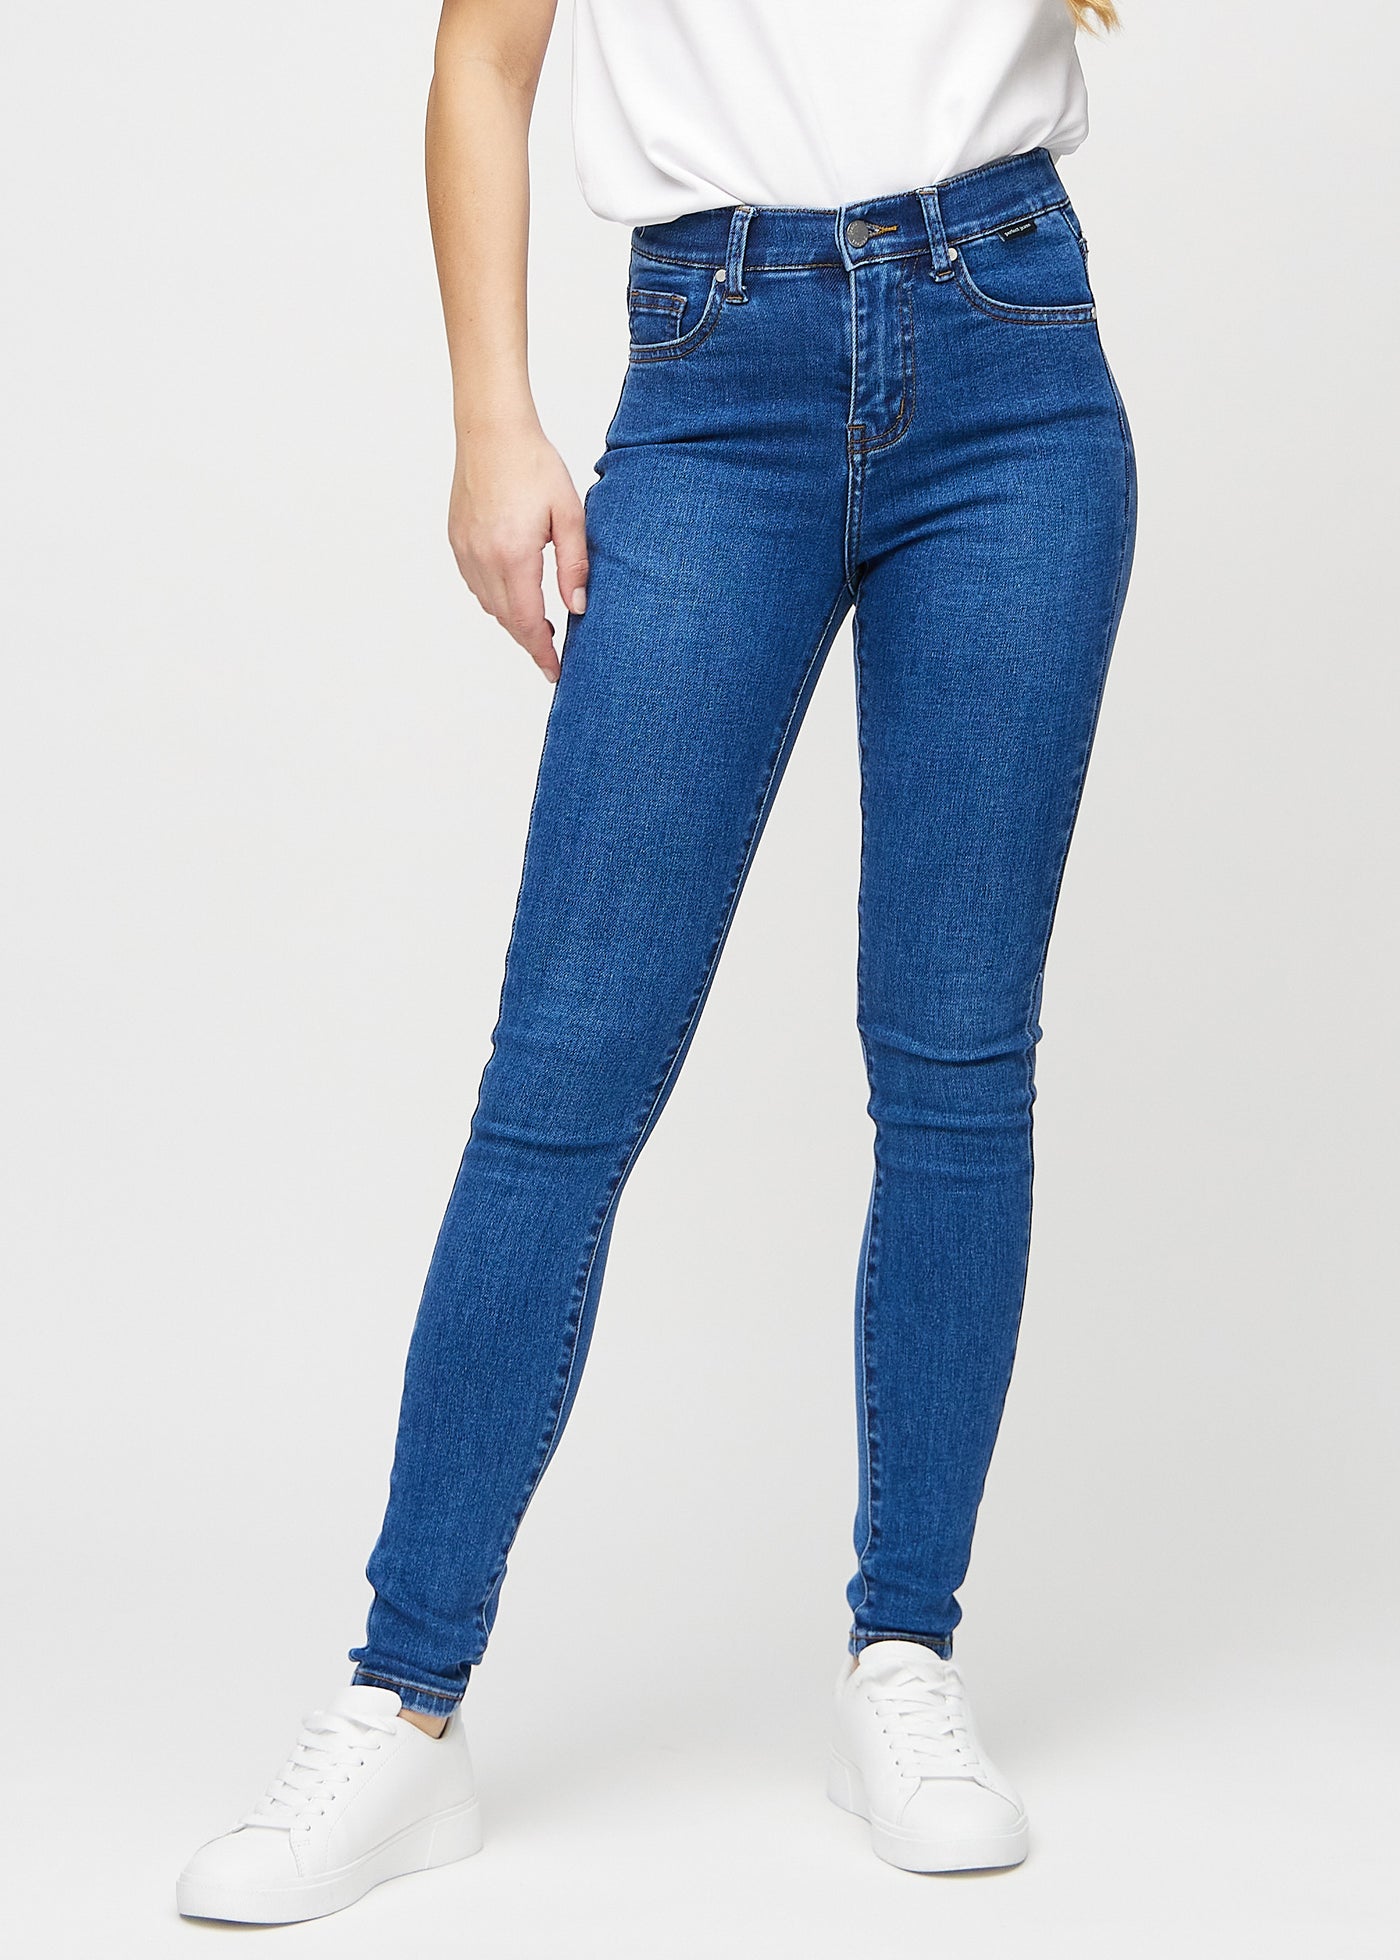 Perfect Jeans - Skinny - Oceans™